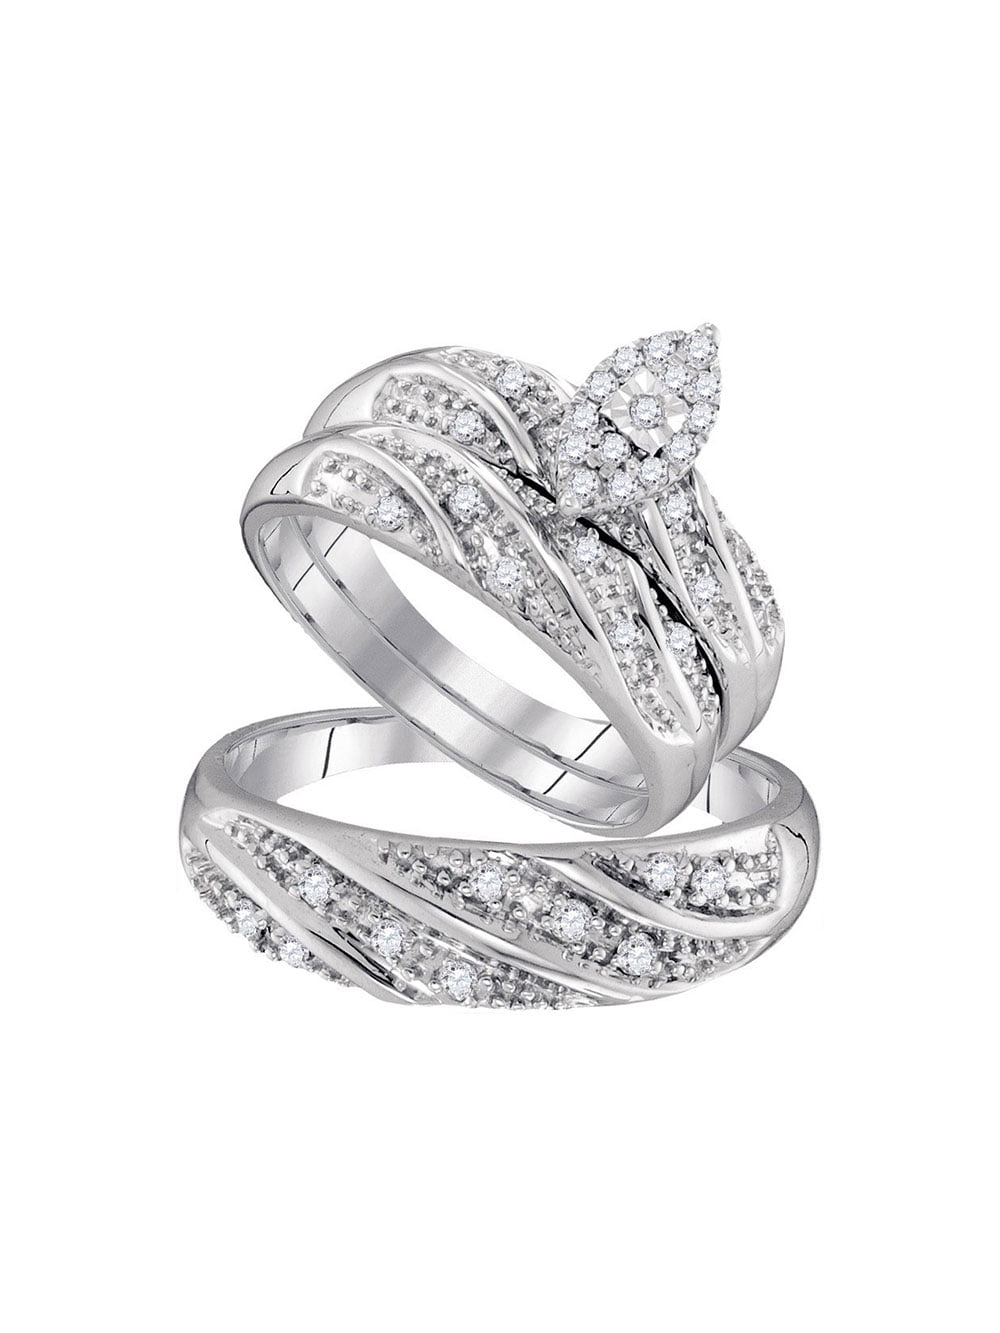 Details about   8 MM White Round Diamond Engagement Ring Wedding Band Set 14K White Gold Finish 